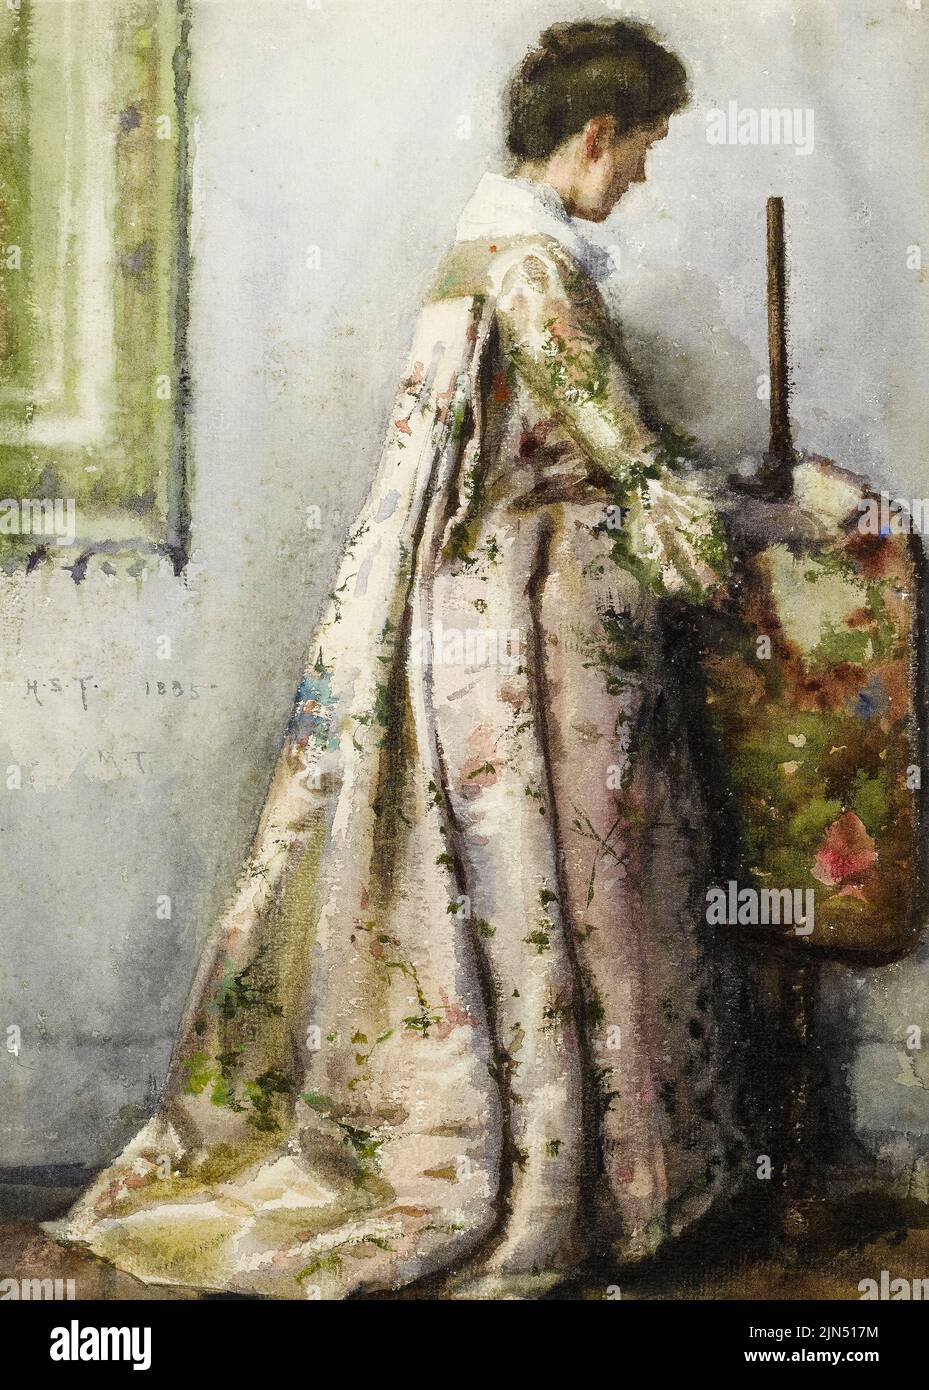 Henry Scott Tuke, The Silk Gown: Portrait of Maria Tuke Sainsbury, painting in watercolour, 1885 Stock Photo